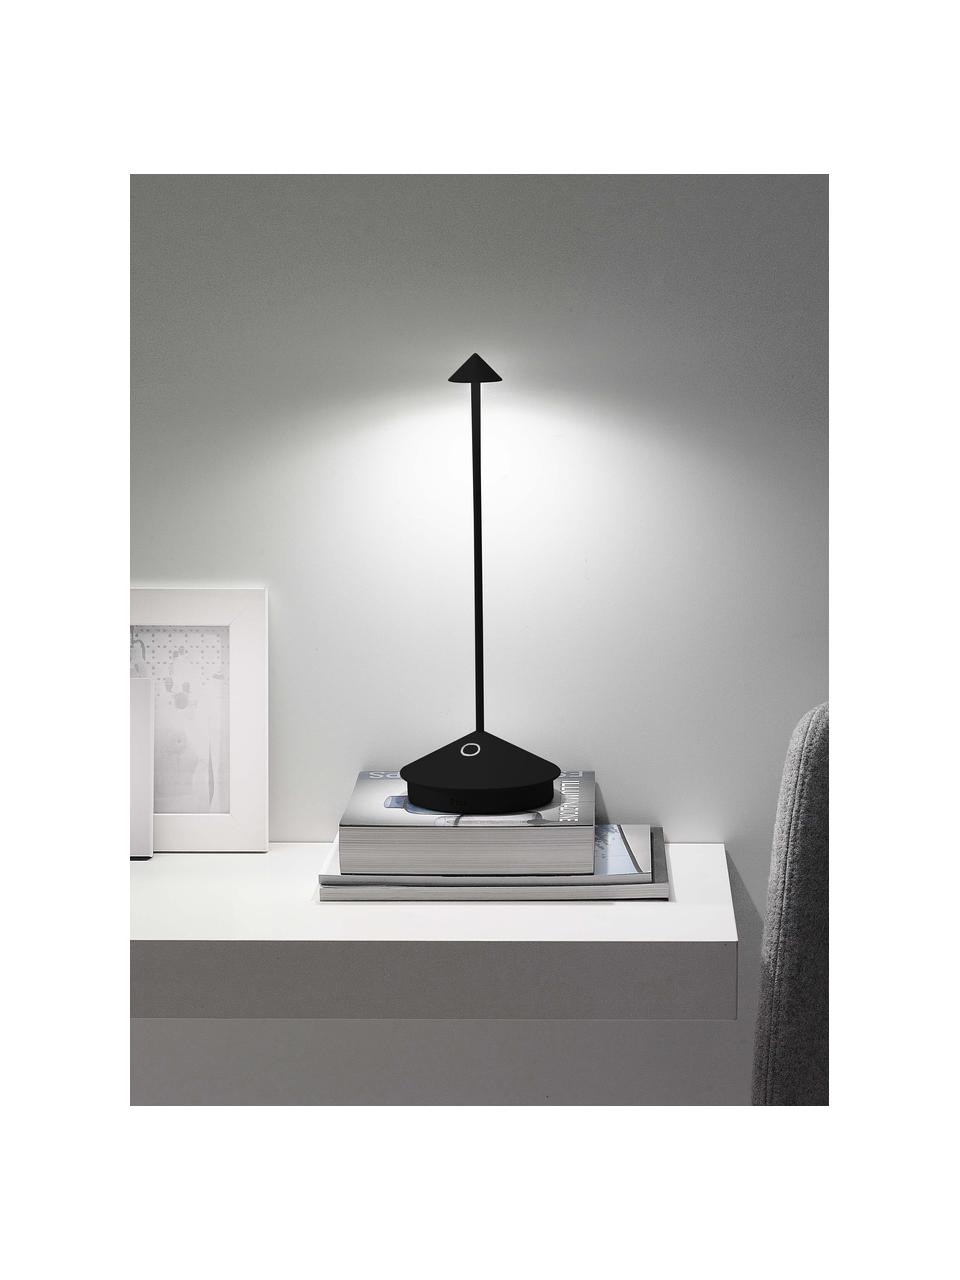 Kleine mobiele LED tafellamp Pina, dimbaar, Lamp: aluminium, gecoat, Zwart, Ø 11 x H 29 cm